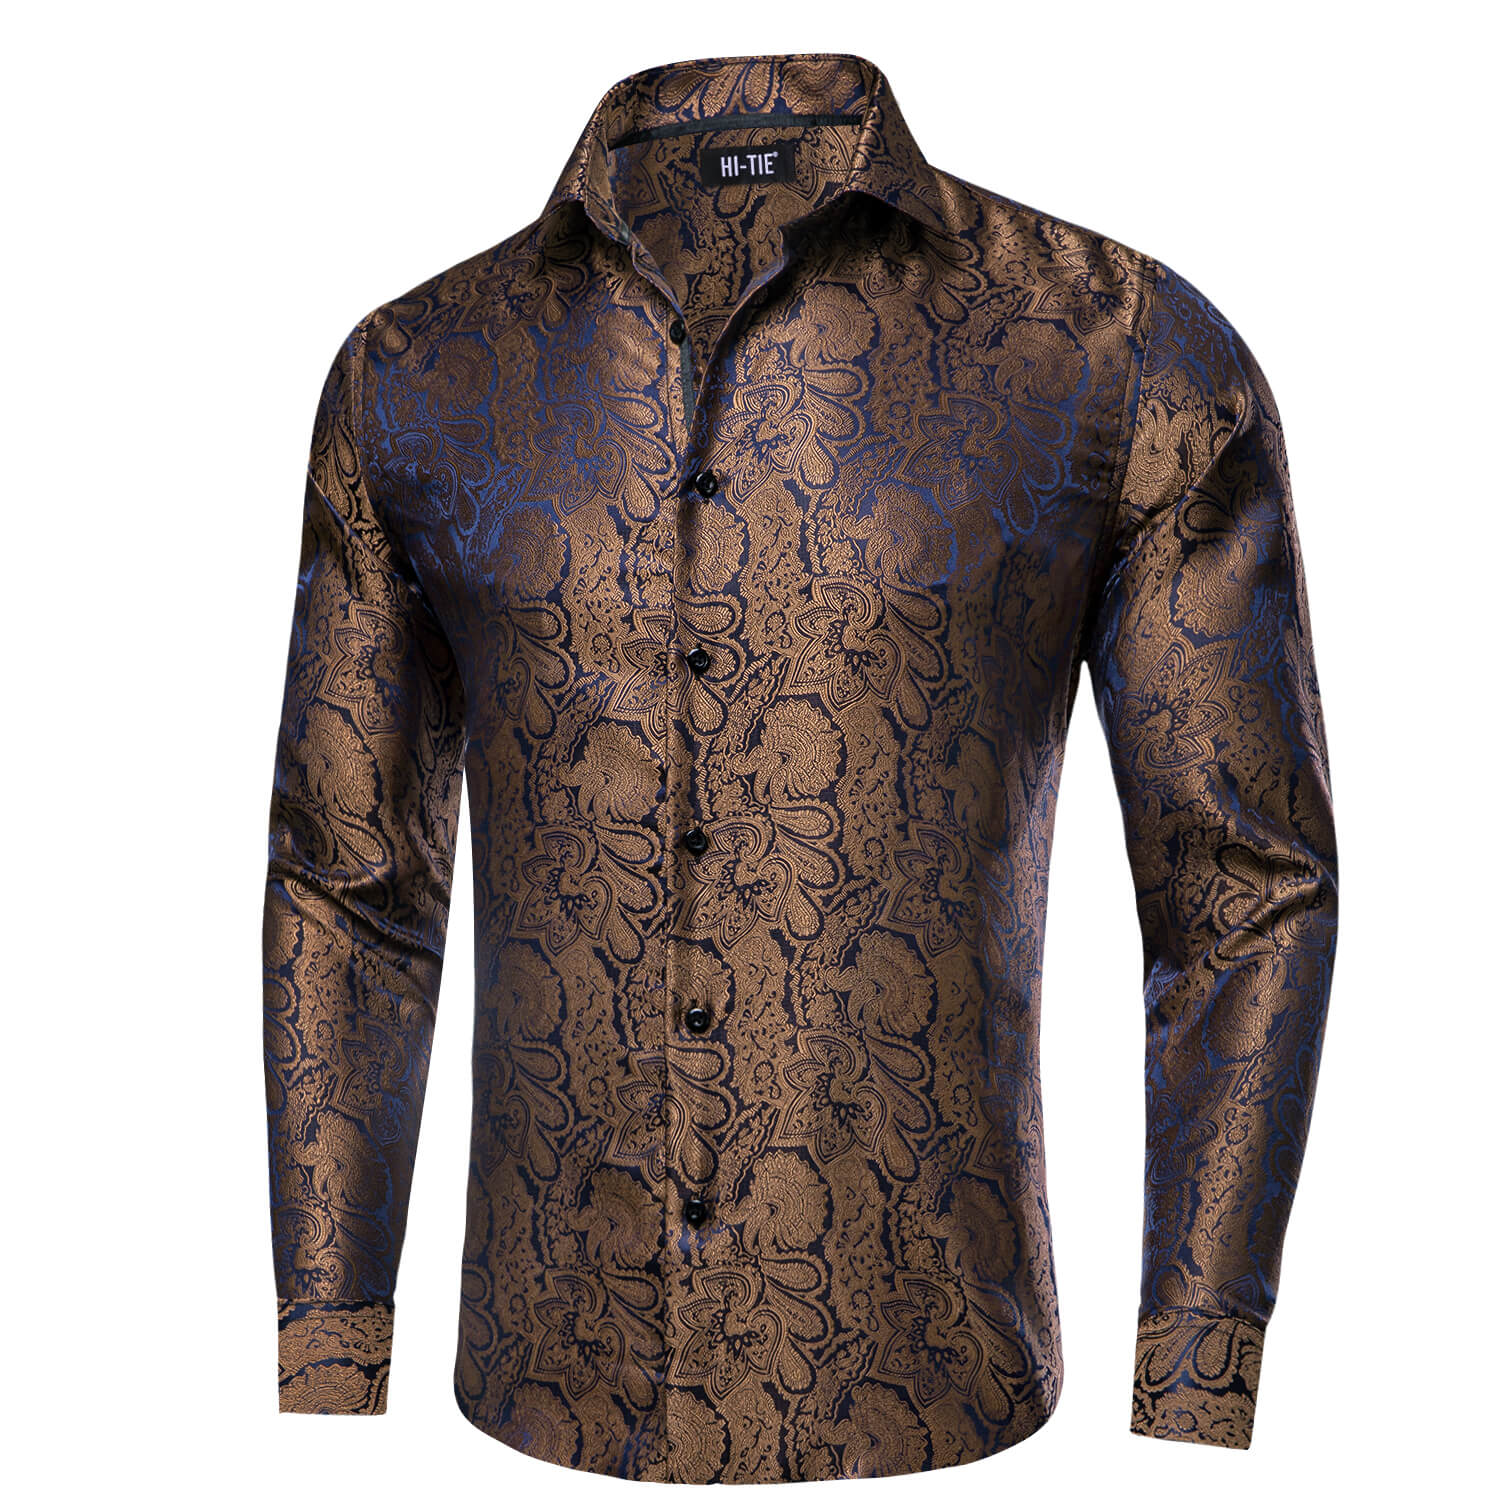 Hi-Tie Men's Shirt Peanut Brown Blue Jacquard Floral Silk Shirt New Fashion